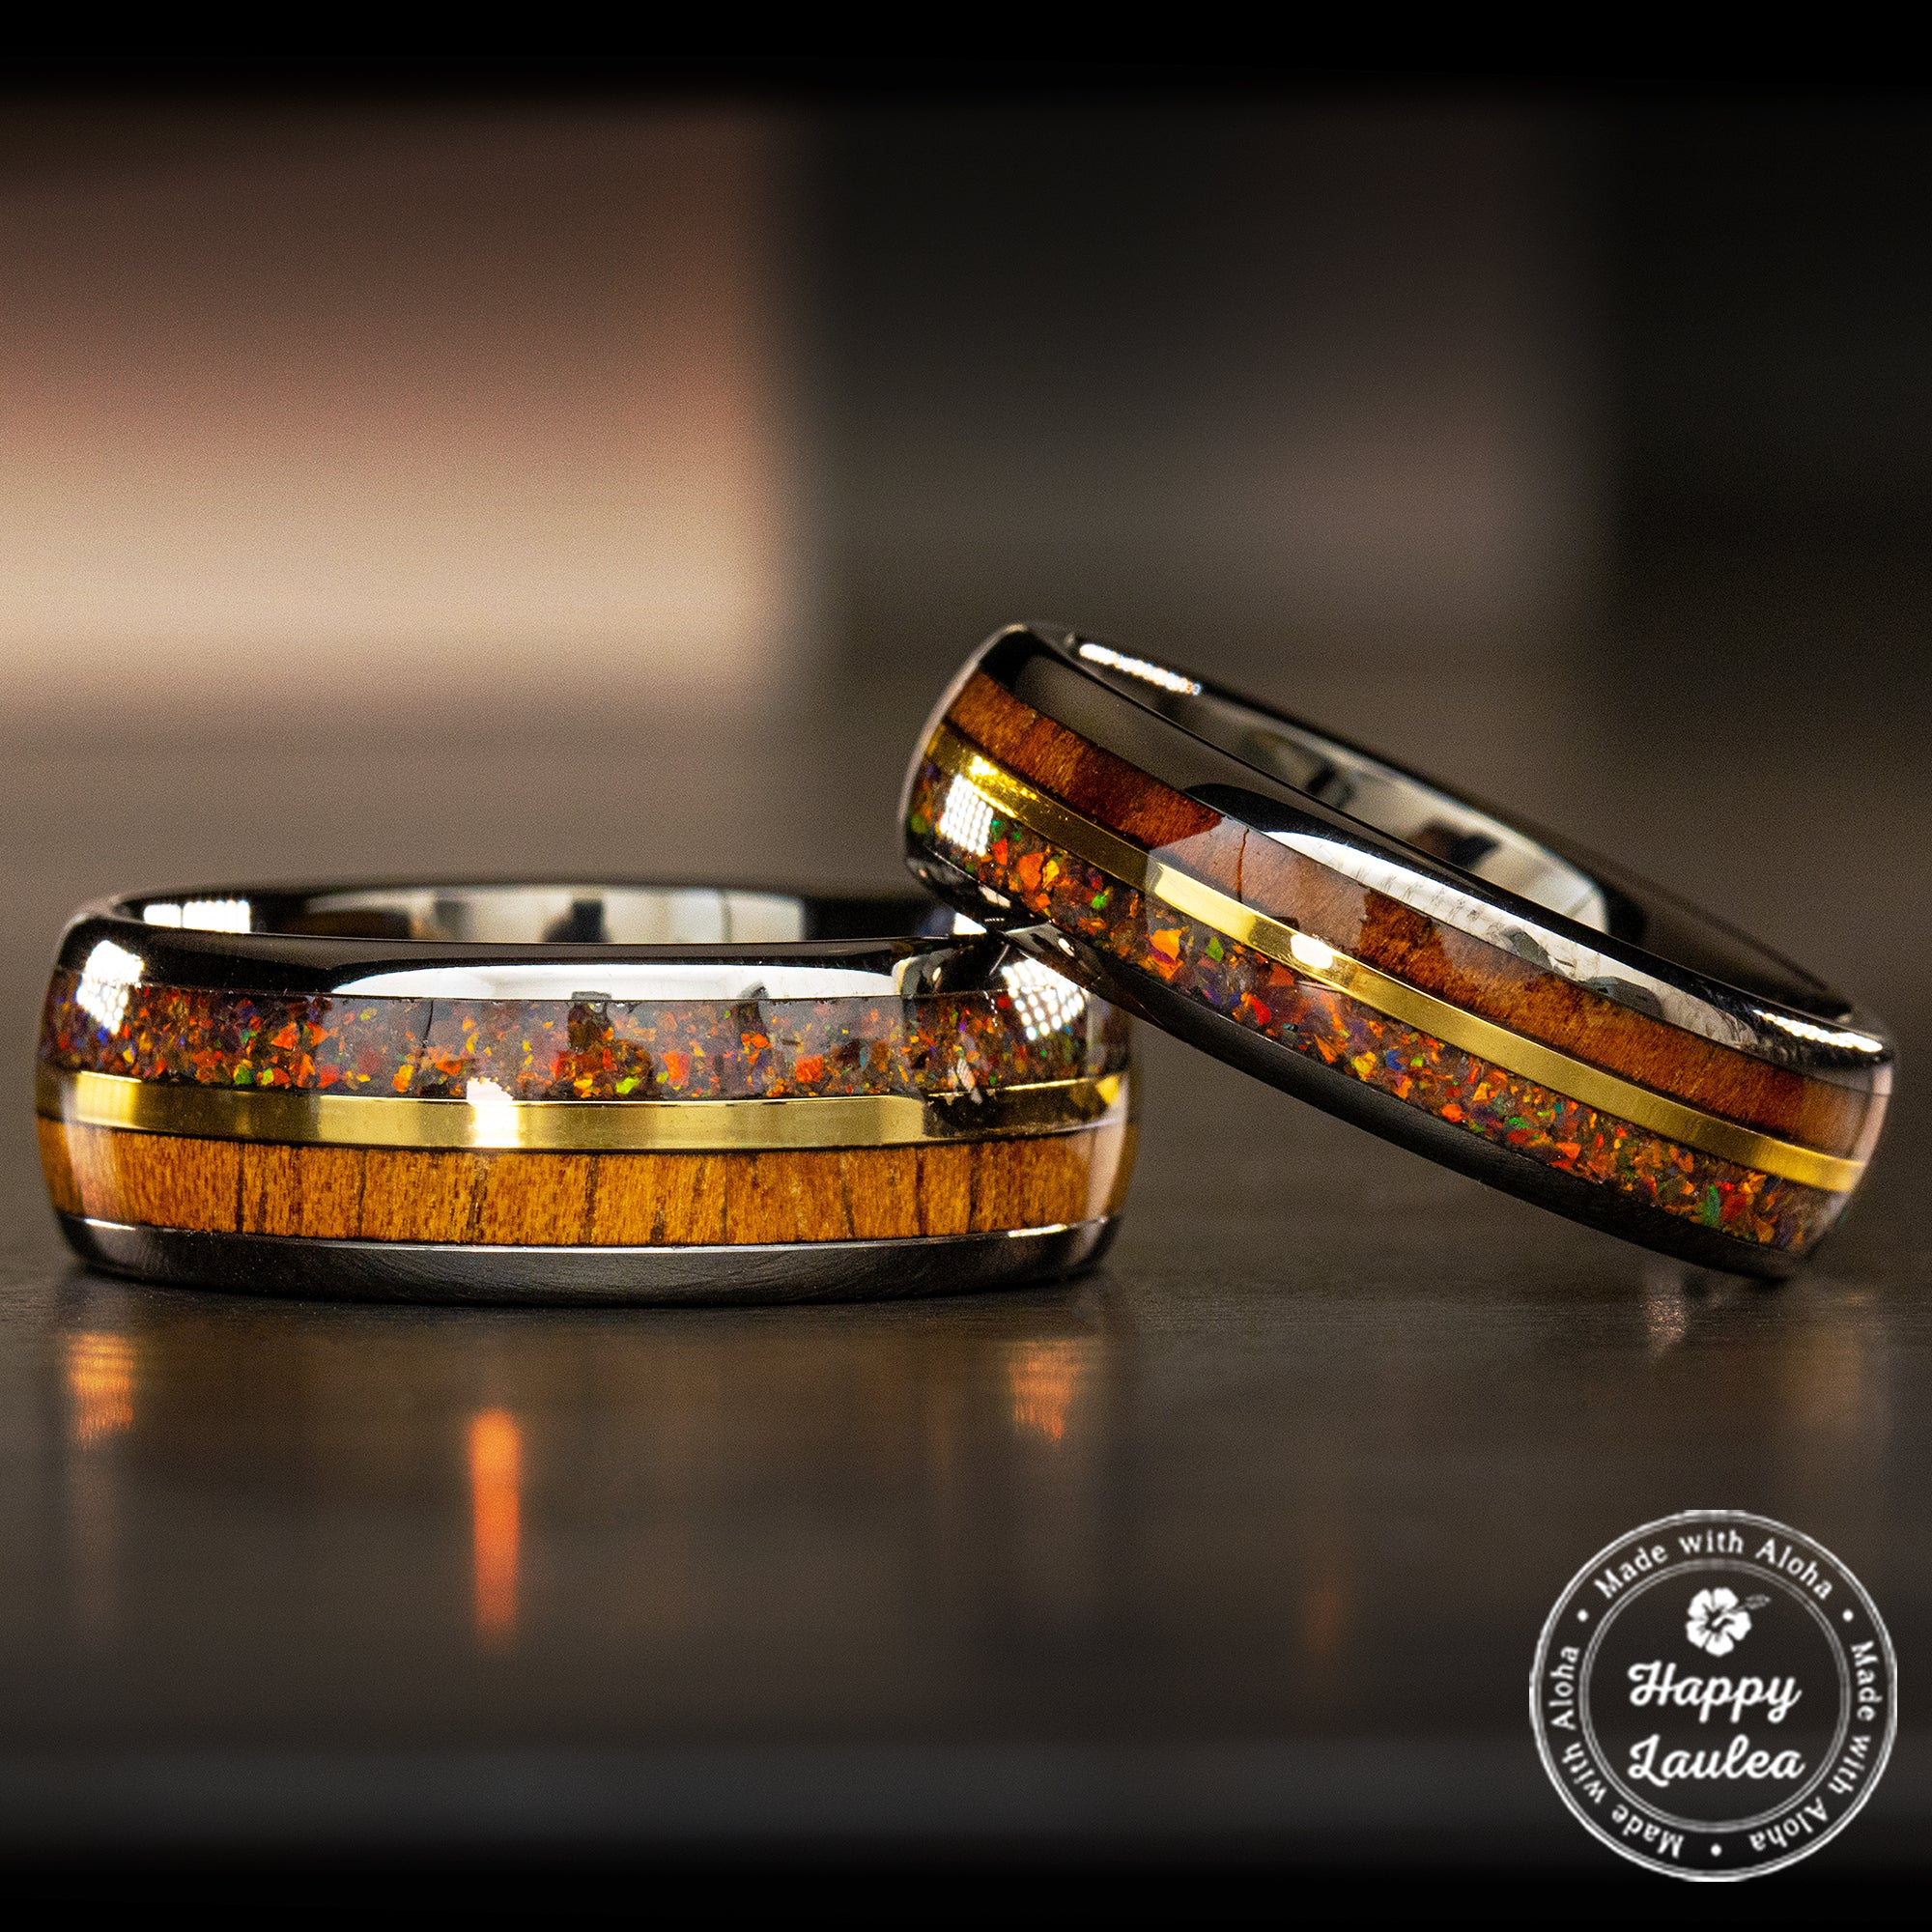 Pair of Gunmetal Tungsten Carbide Mid-Gold Strip Ring Set [6&8mm widths] Fire Opal & Hawaiian Koa Wood - Barrel Shape, Comfort Fitment